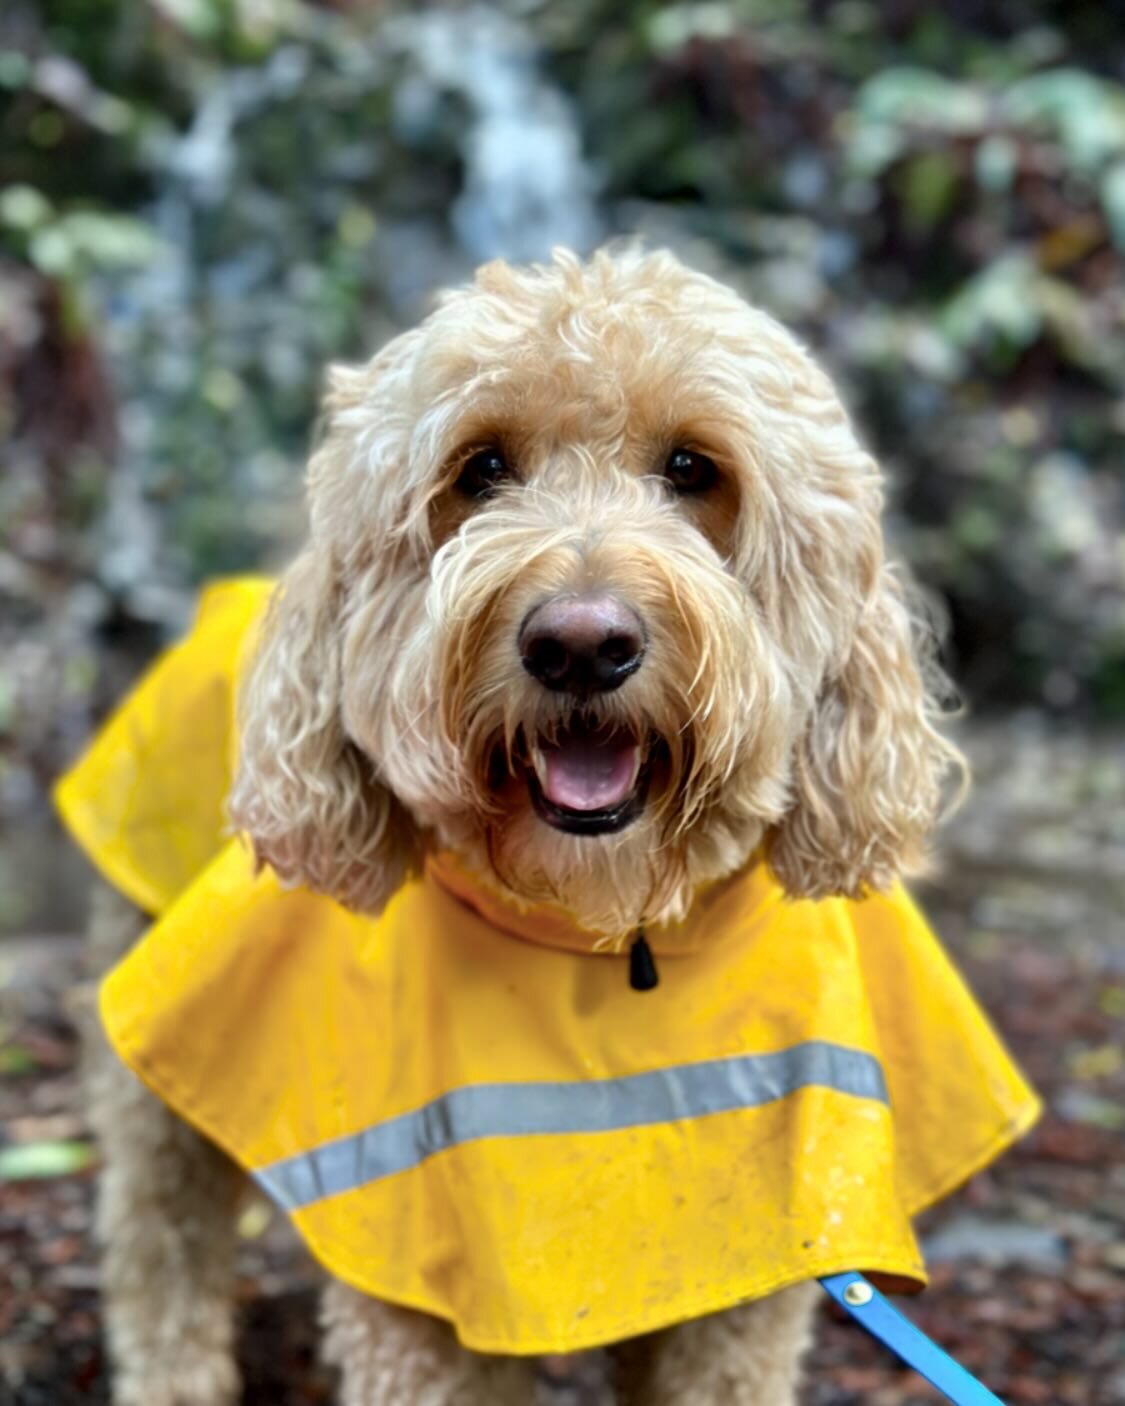 George looking fabulous last week. Get your raincoat ready for Wednesday bud! #marincanineadventures #doglife #happydog #dogsofinsta #dogsofinstagram #dogohotography #marindogs #traildogs #hikewithdogs #outdoordogs #goldendoodle #goldendoodles #golde